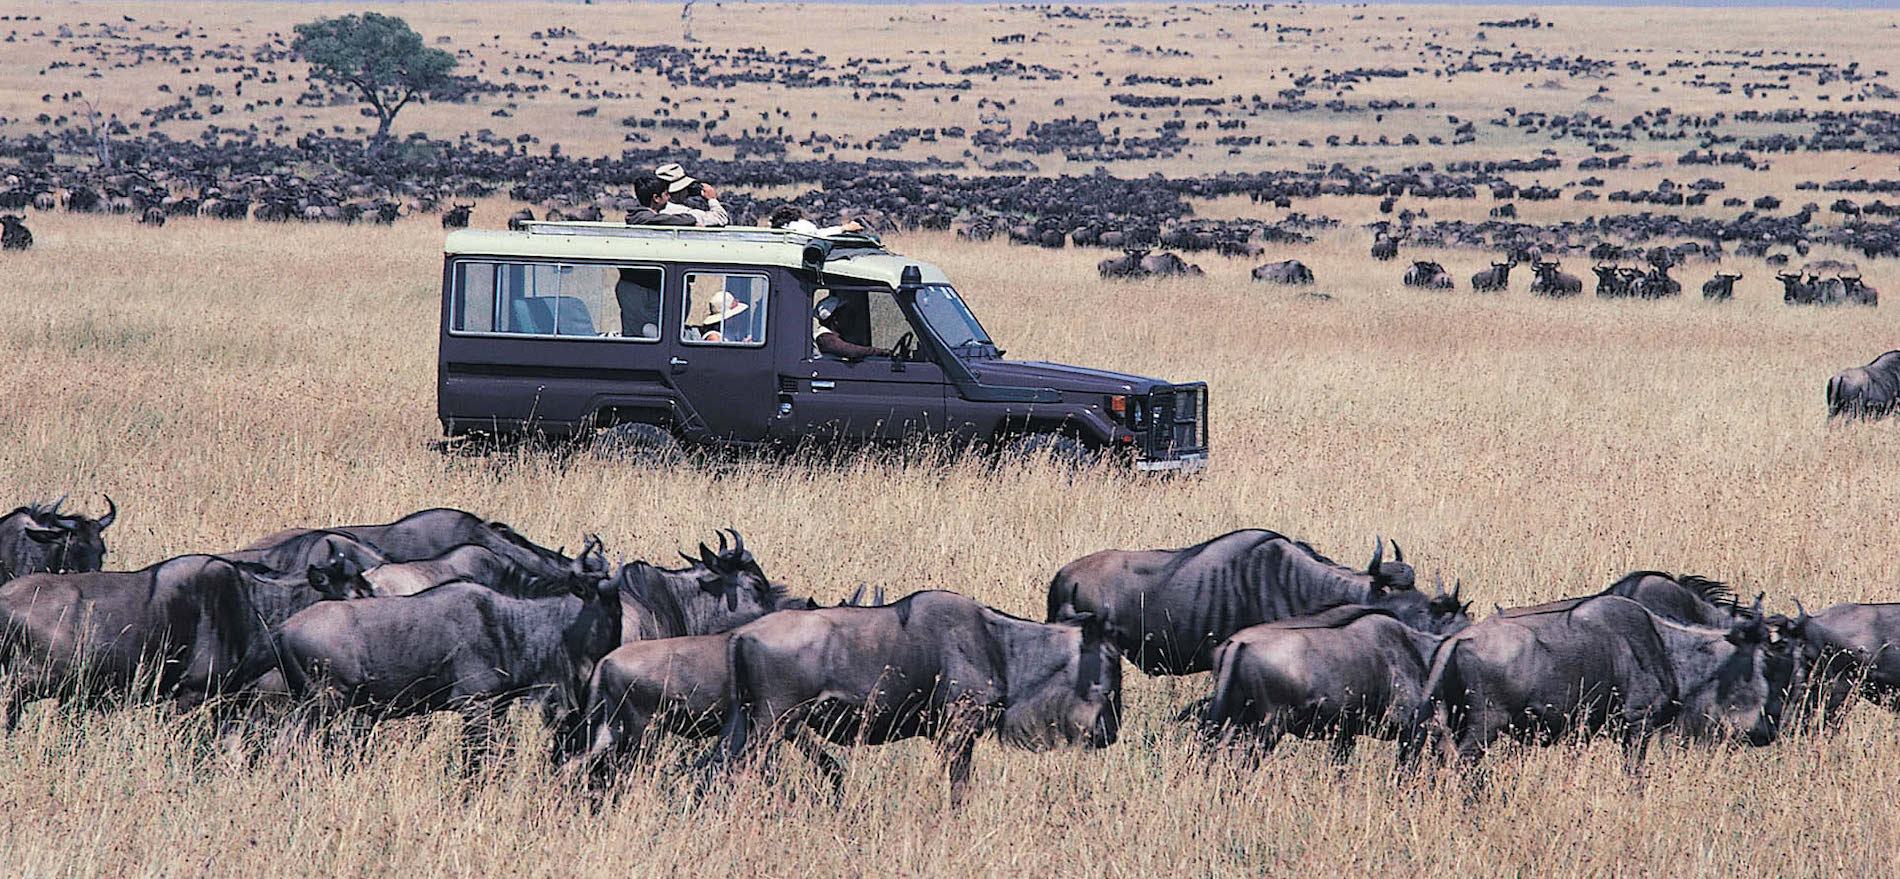 True Facts About Maasai Mara National Reserve